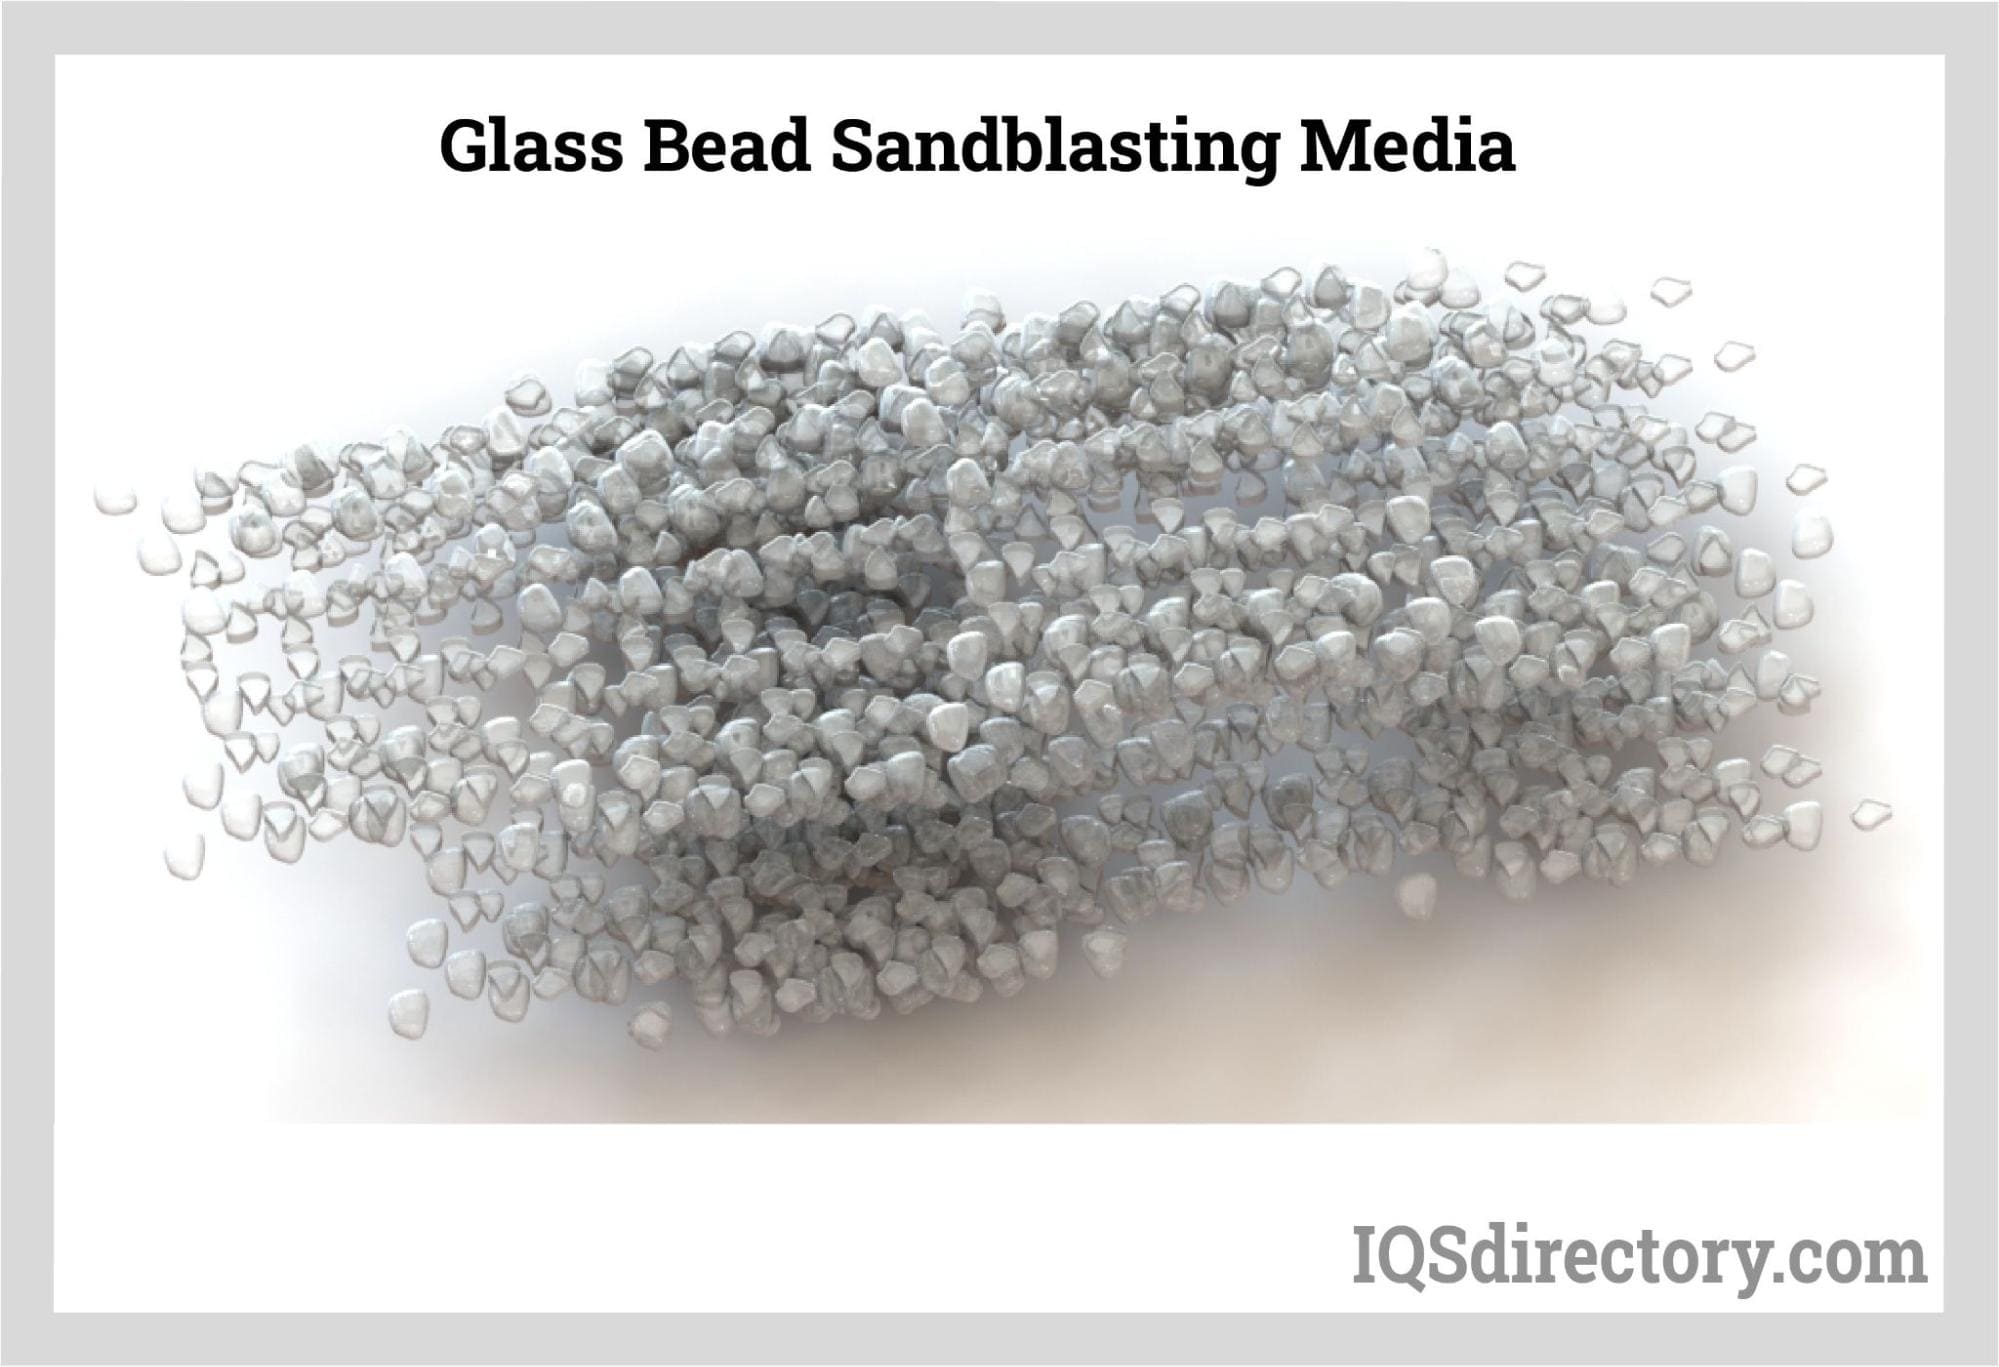 Glass Bead Sandblasting Media